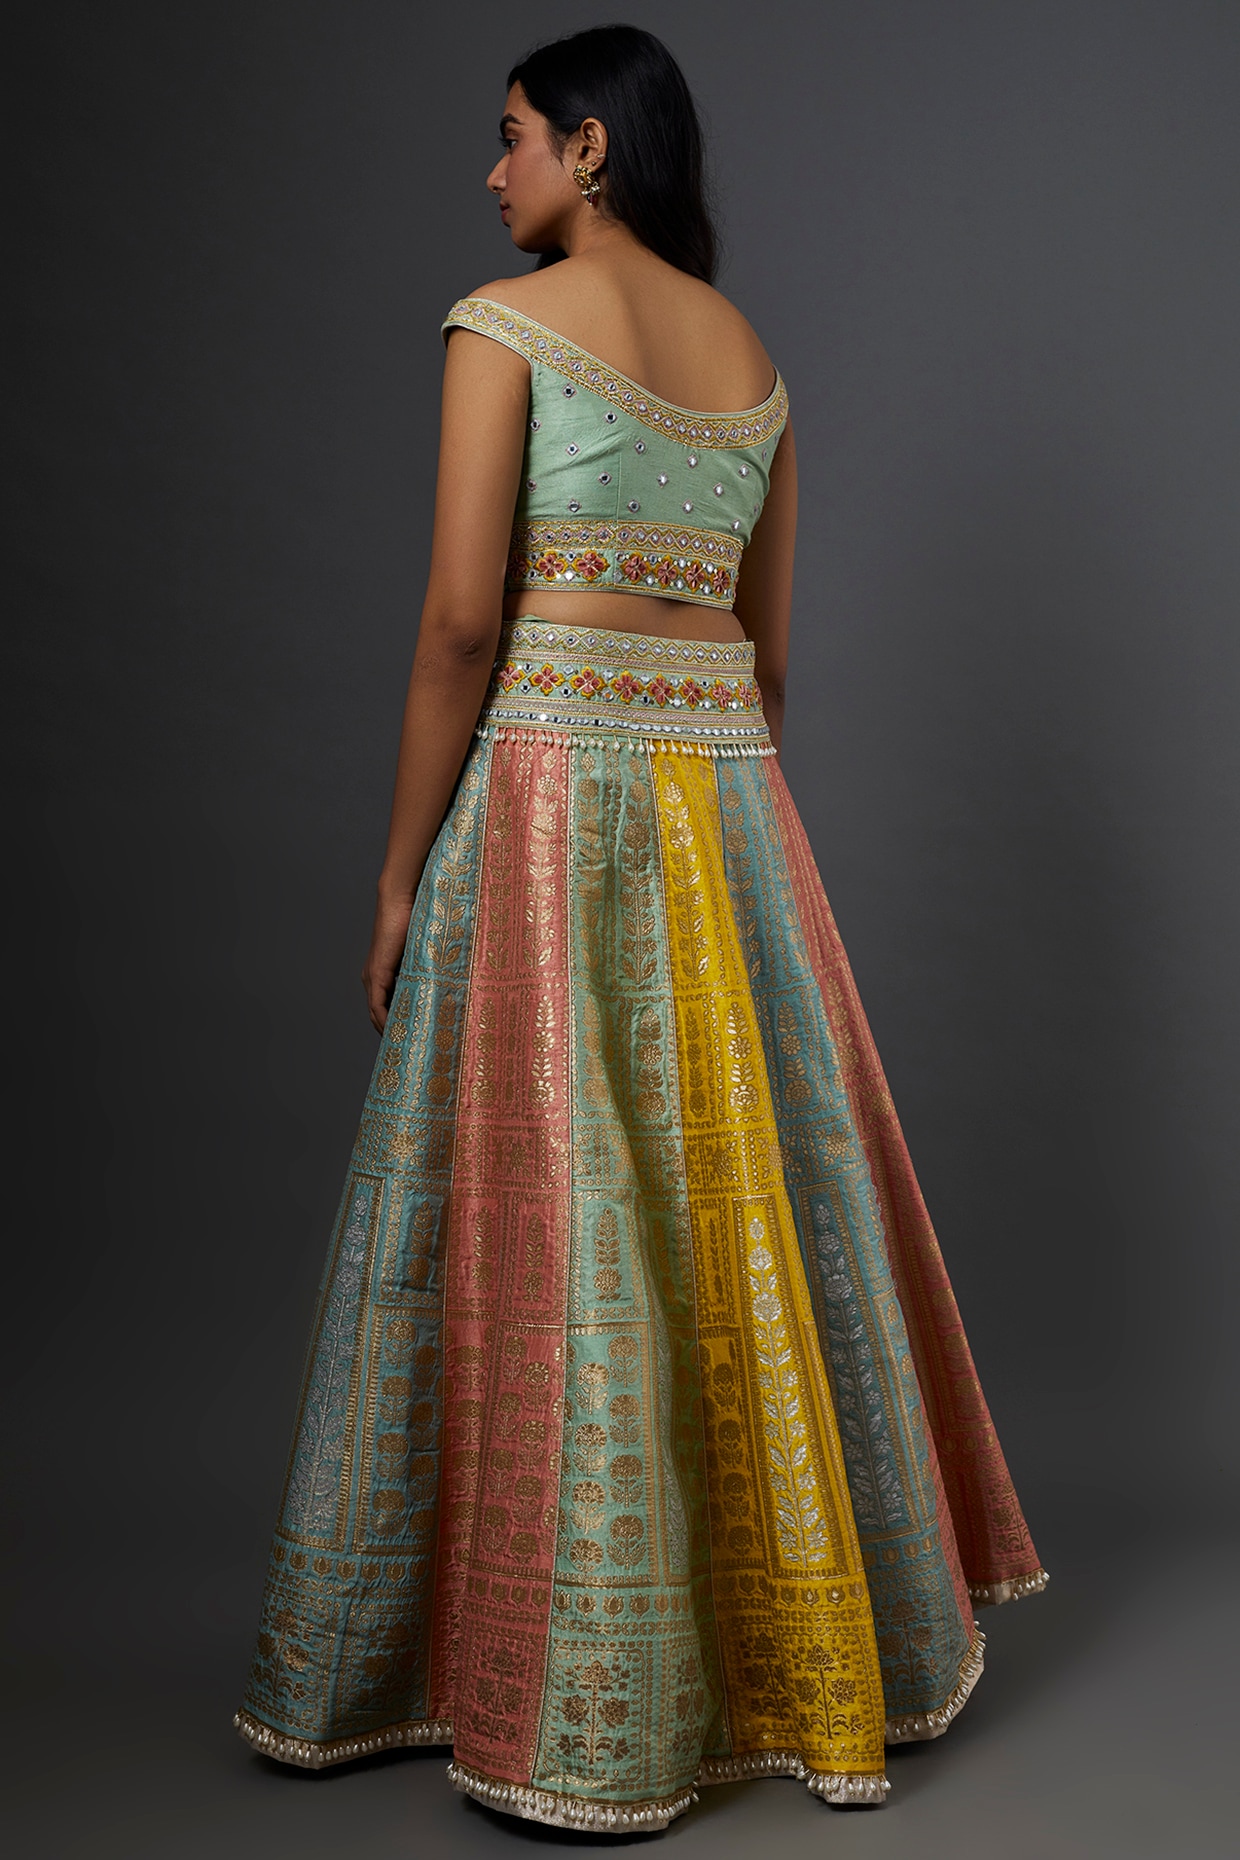 Bridal Mehndi Multi-Colored Lehengas with Choli in Silk Fabirc – Nameera by  Farooq